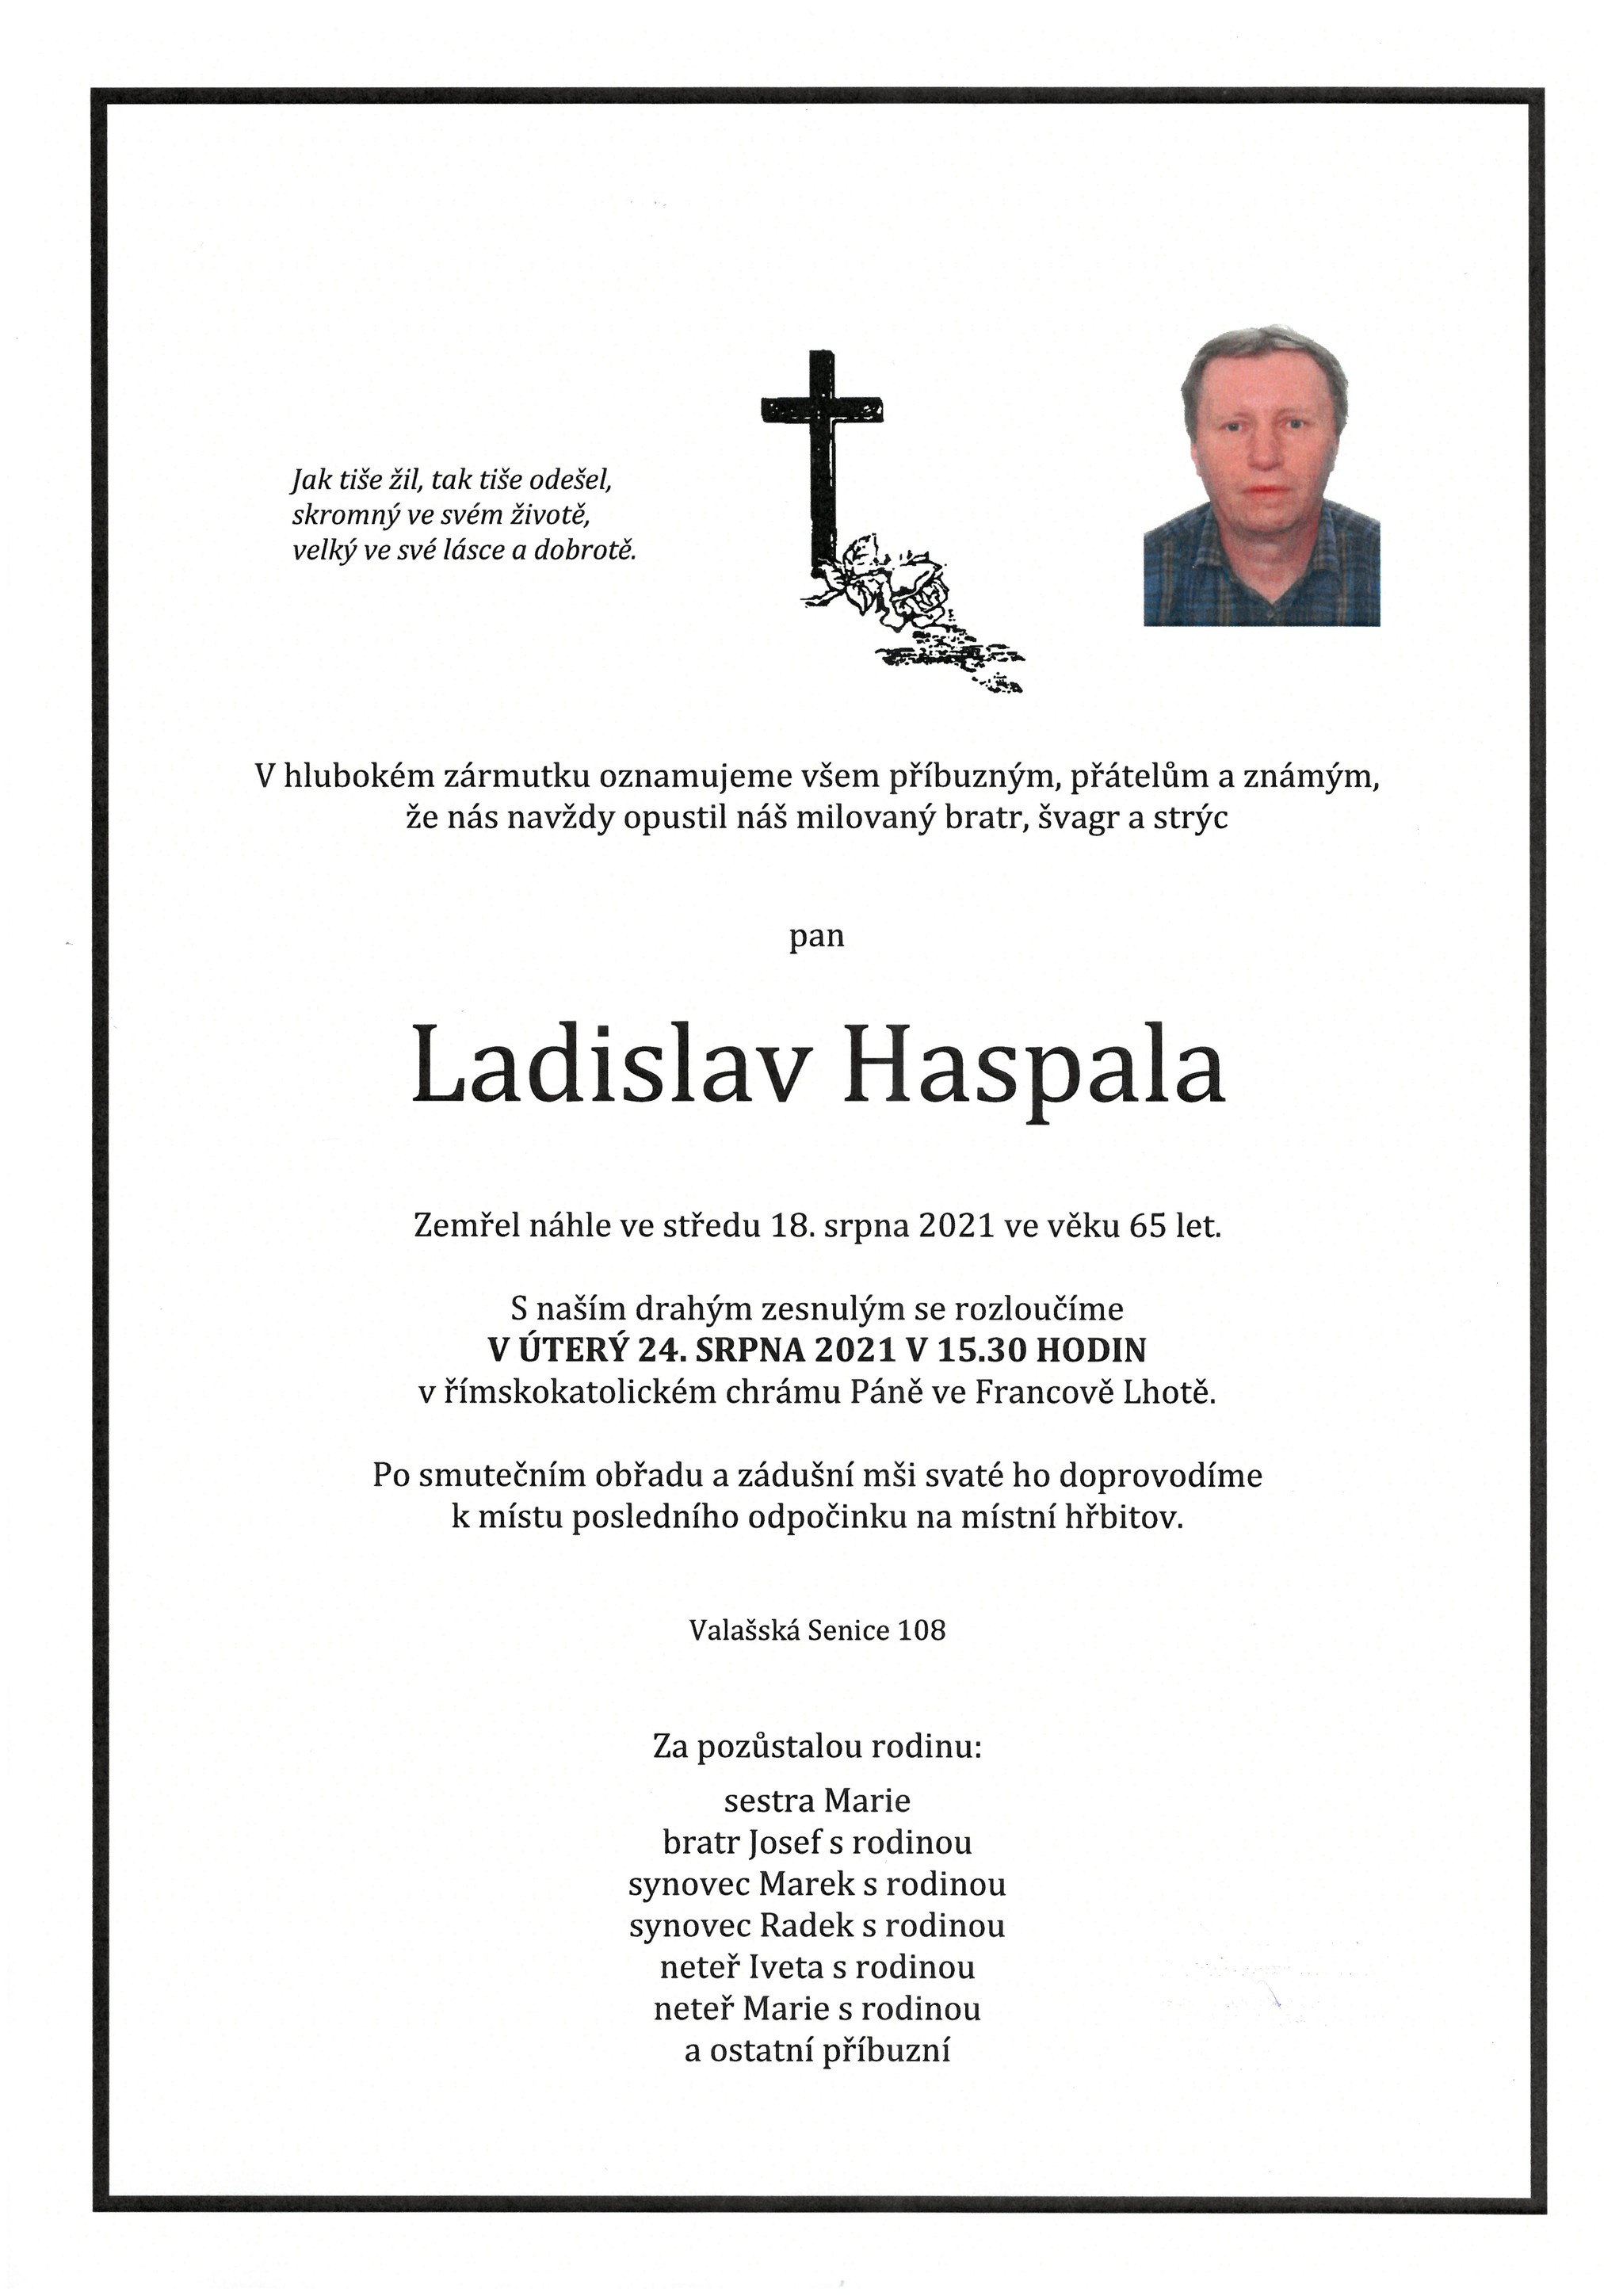 Ladislav Haspala